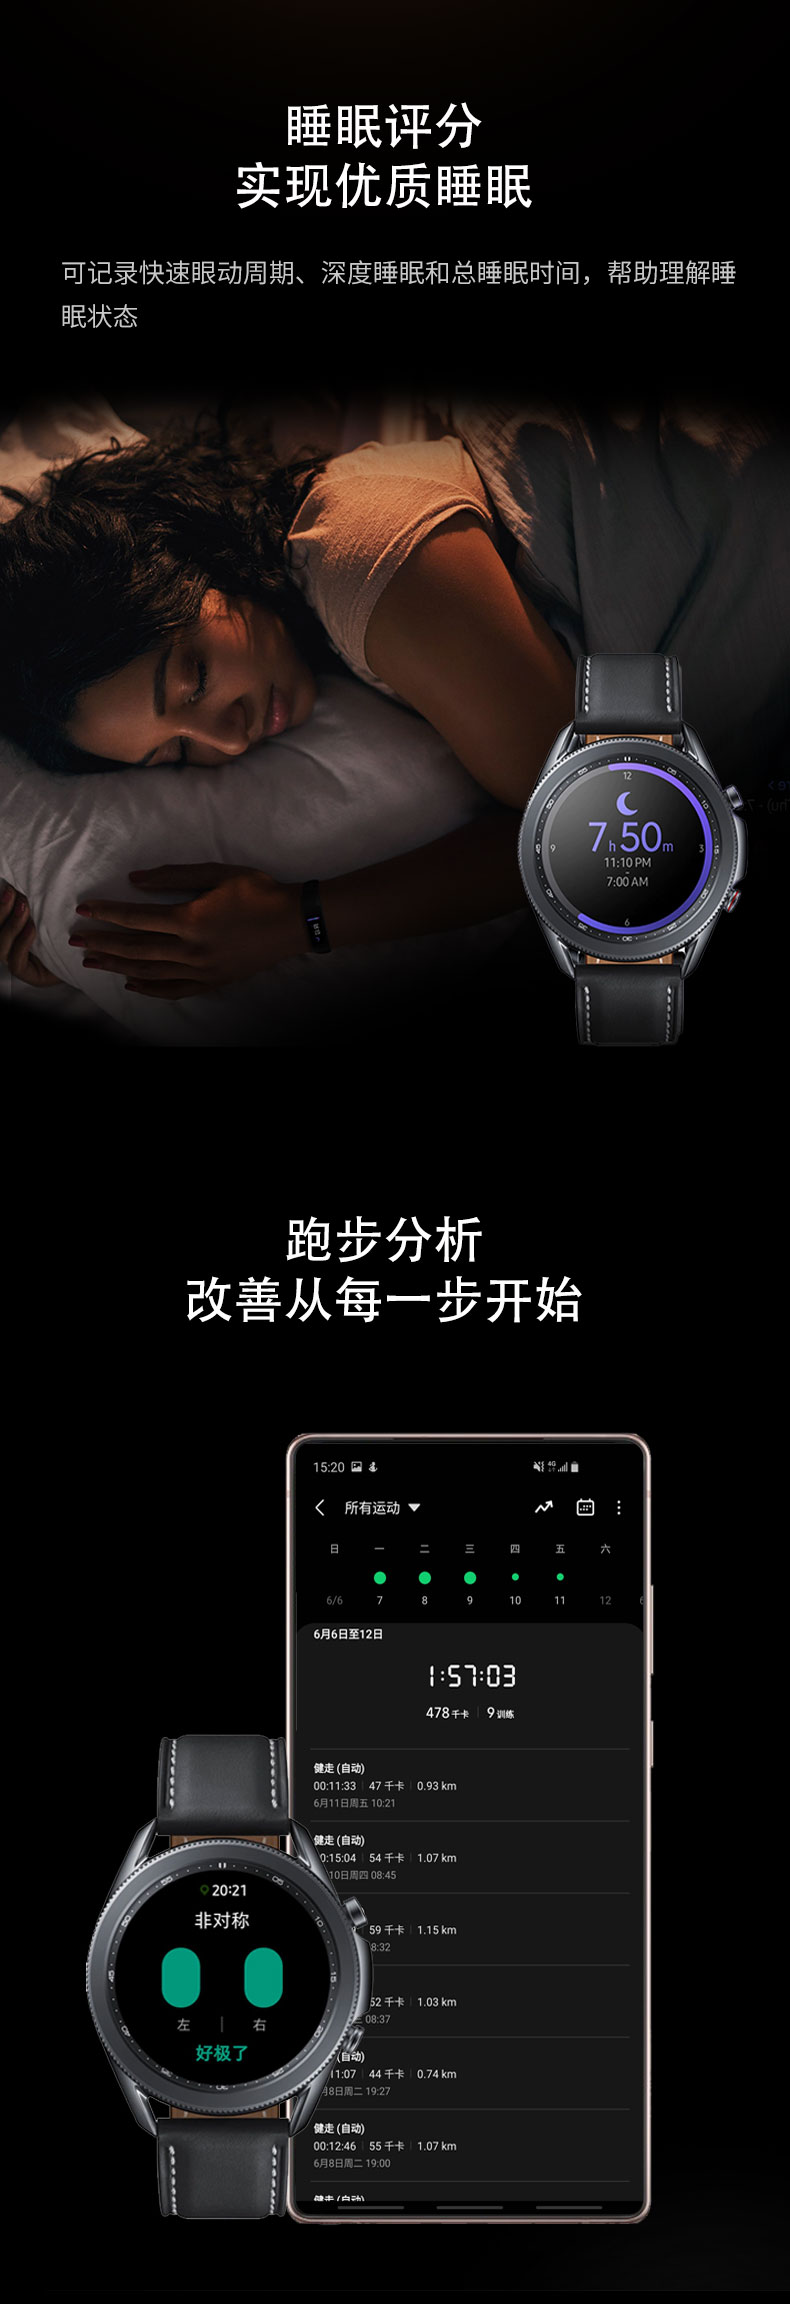 SAMSUNG Galaxy Watch3 LTE版 三星手表 运动智能手表 eSIM独立通话/血氧饱和度监测/旋转表圈 45mm曜岩黑